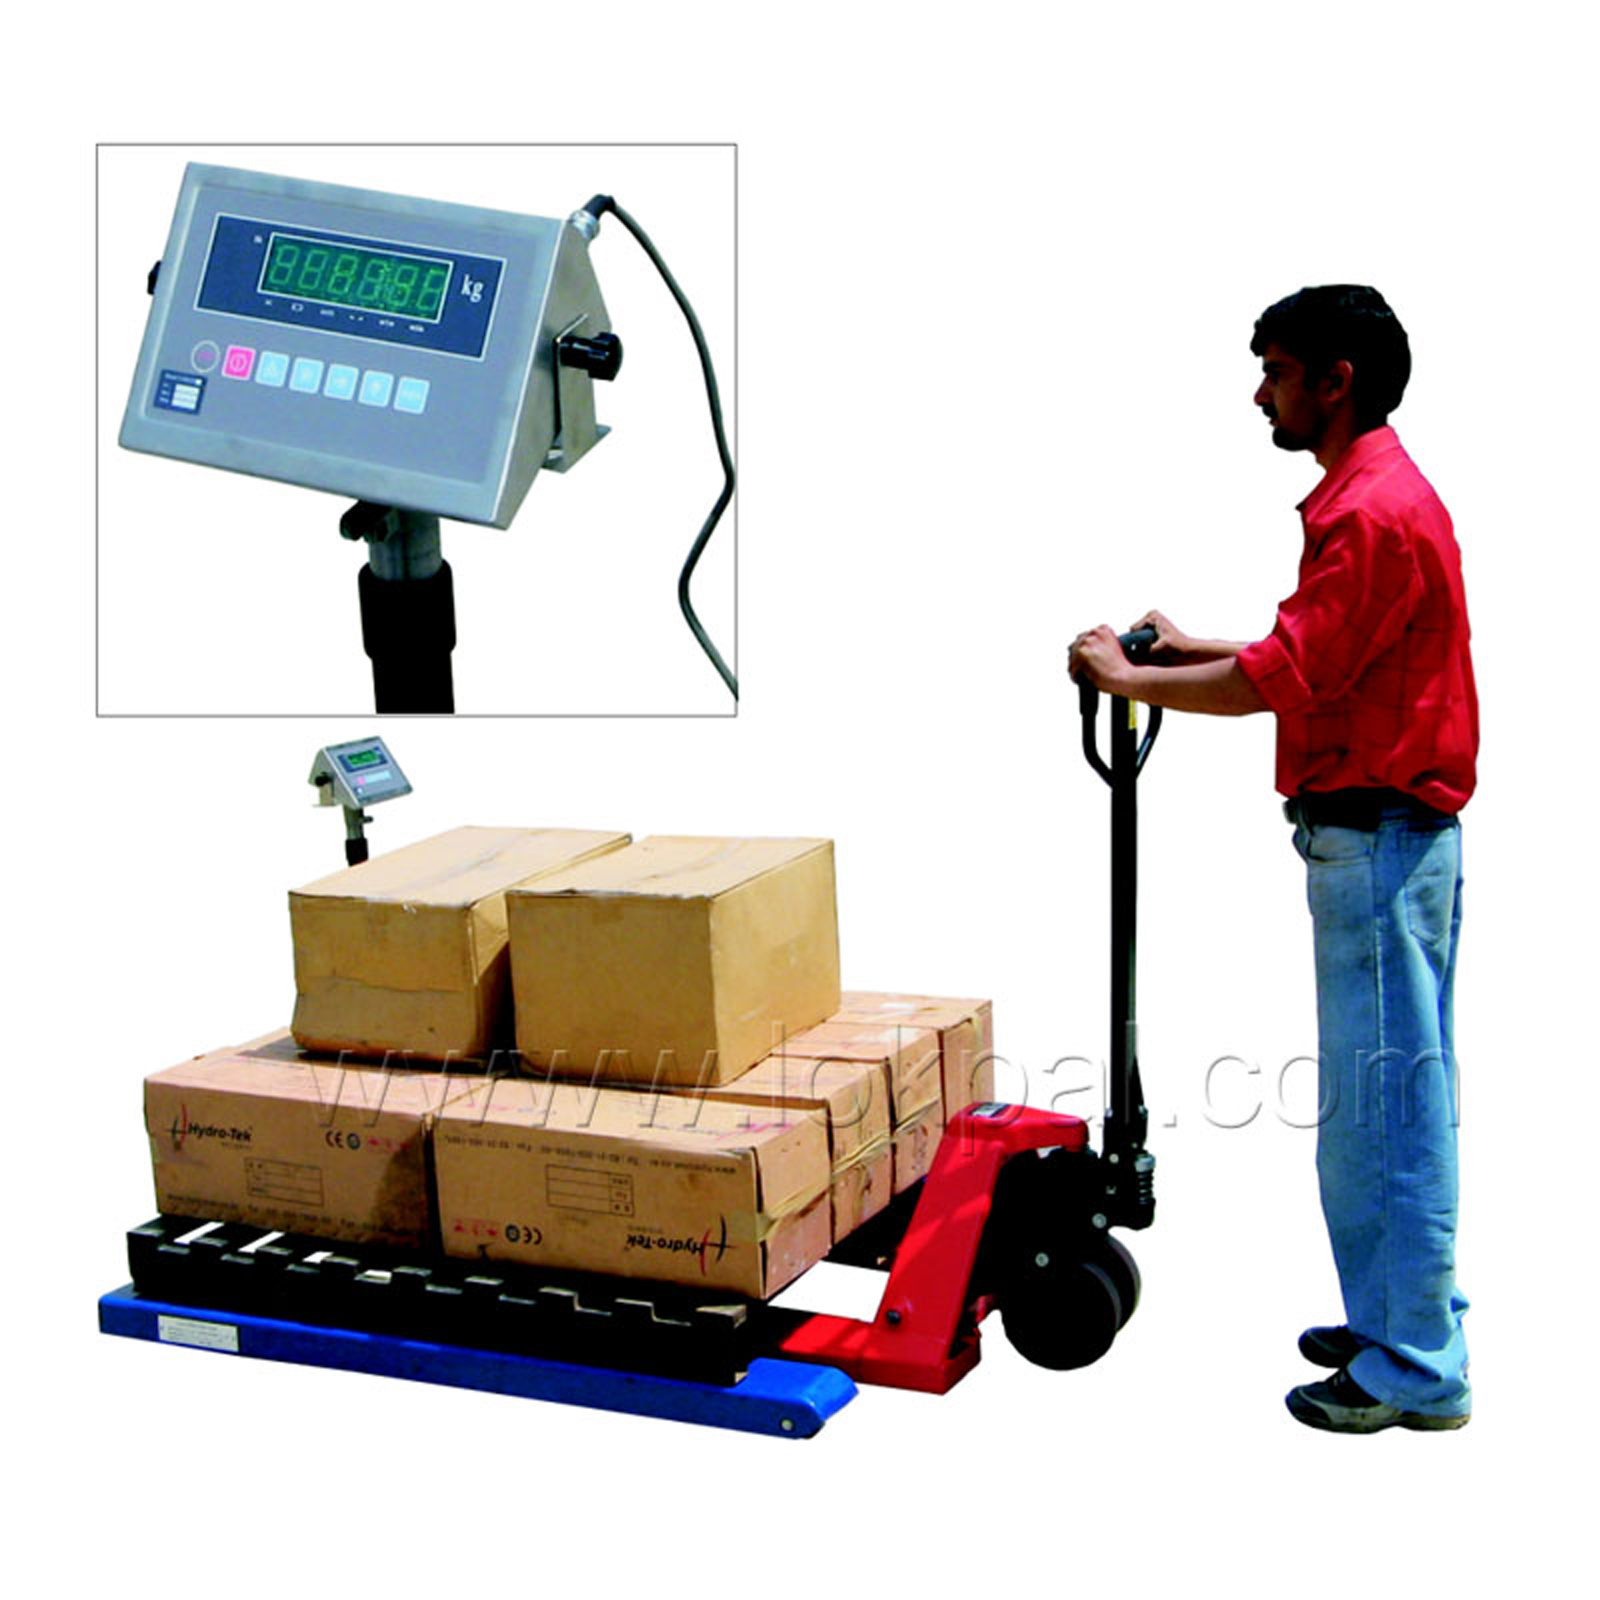 Pallet Weighing Scale, Pallet Weighing Scale Manufacturer, Weighing Scale Supplier, Weighing Scale Wholesaler, Drum Cart Dealers, Pallet Weighing Scale Supplier, Delhi NCR, Noida, India